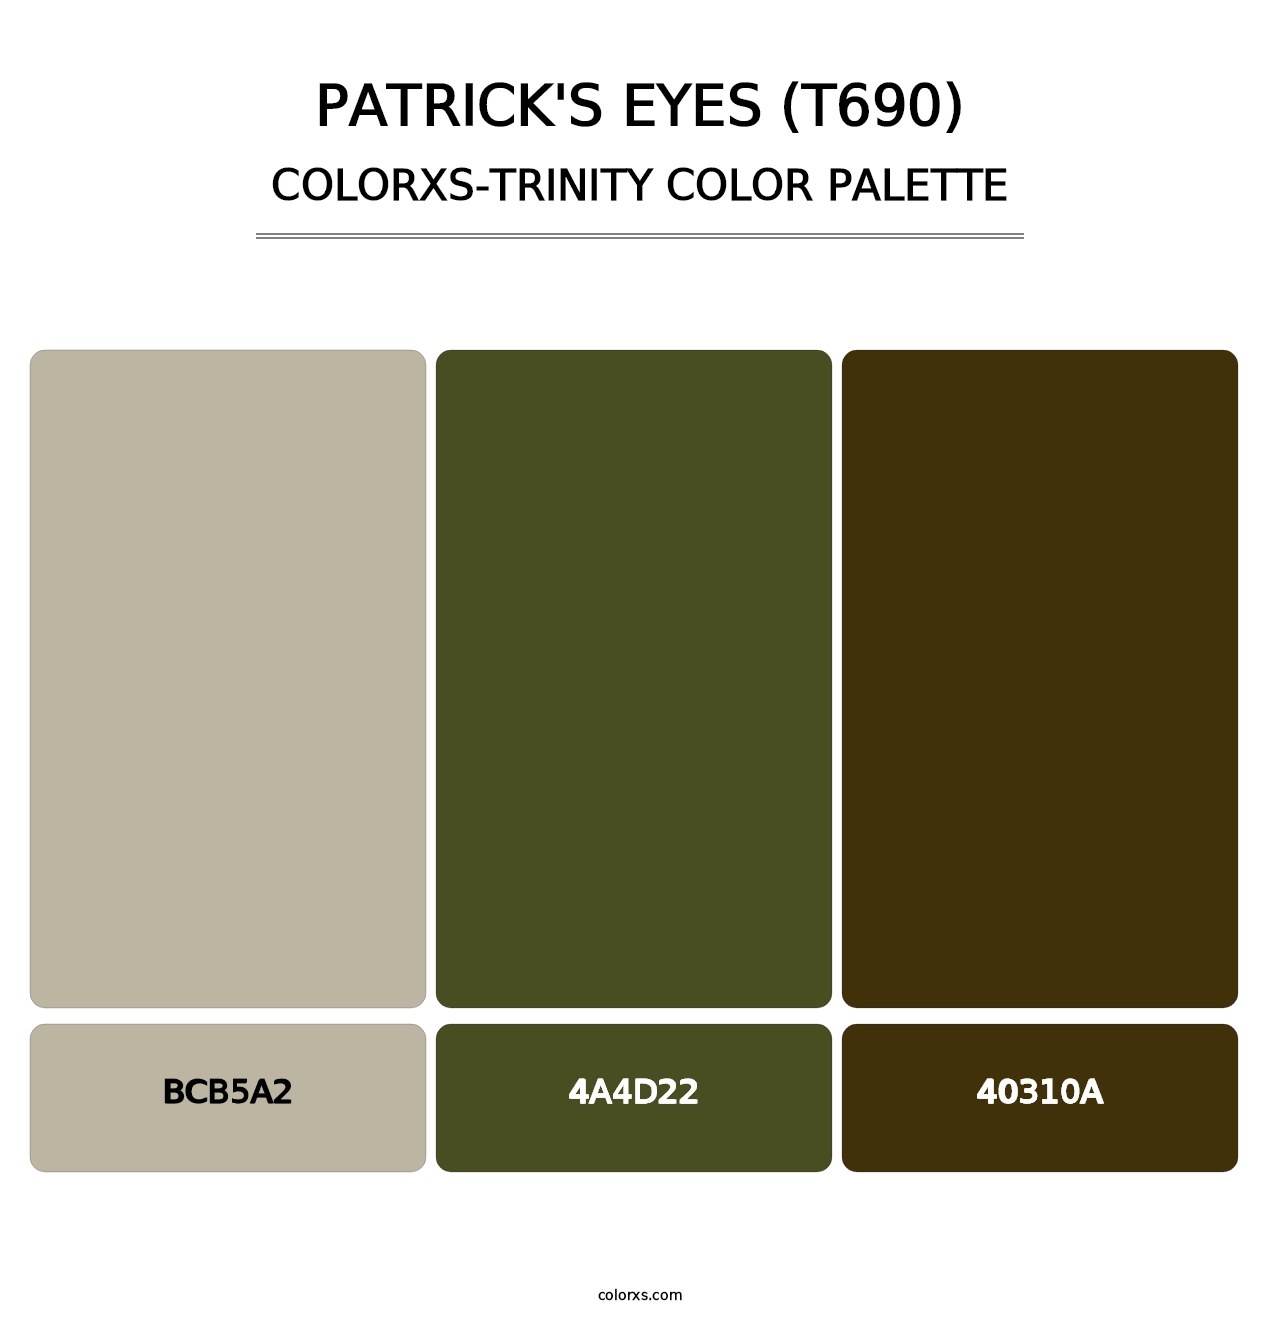 Patrick's Eyes (T690) - Colorxs Trinity Palette